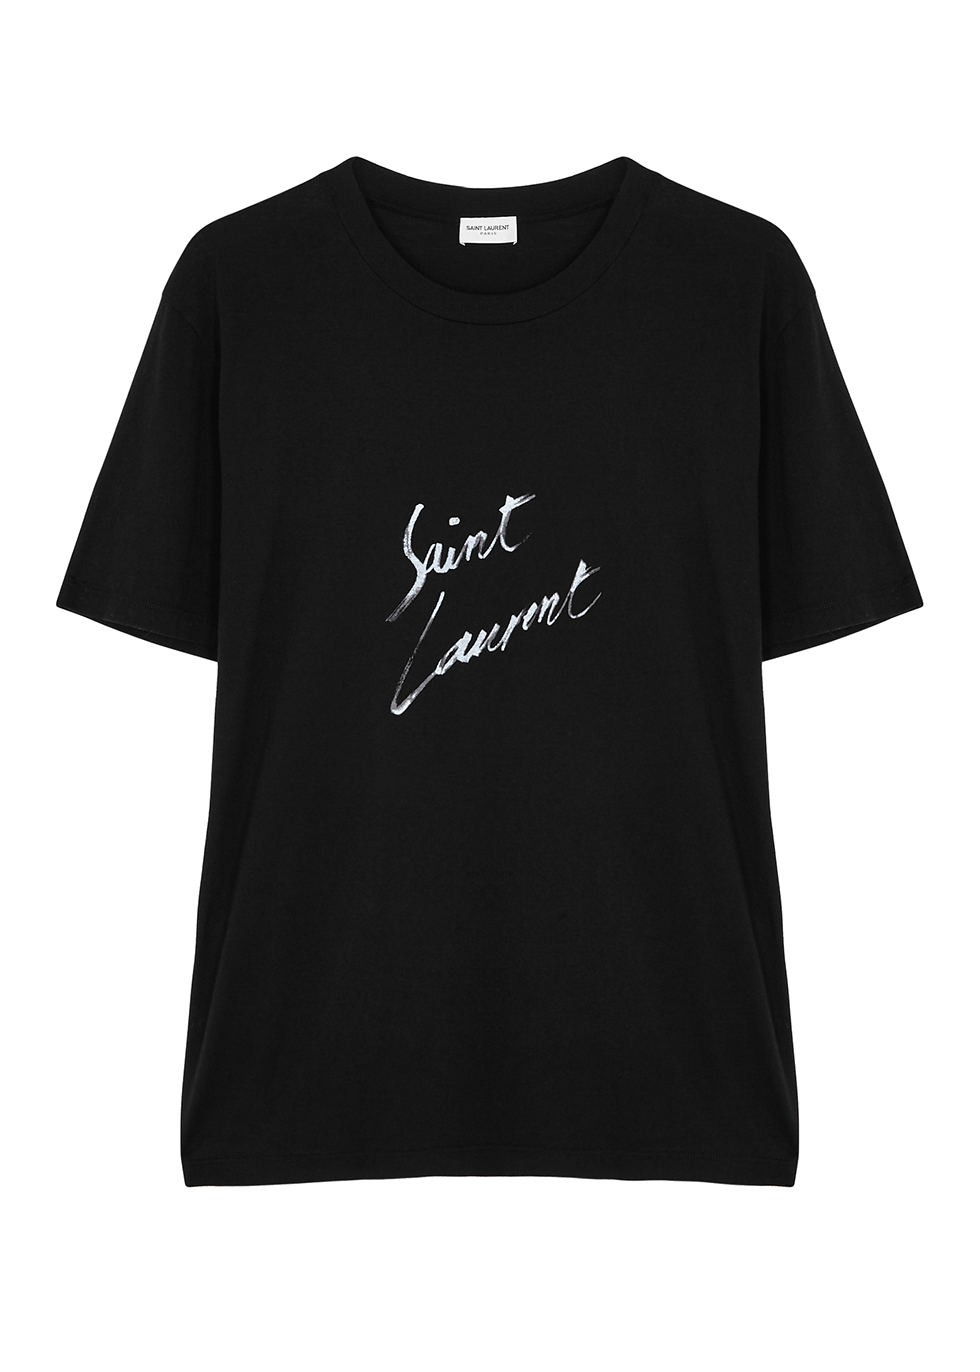 Black logo cotton T-shirt